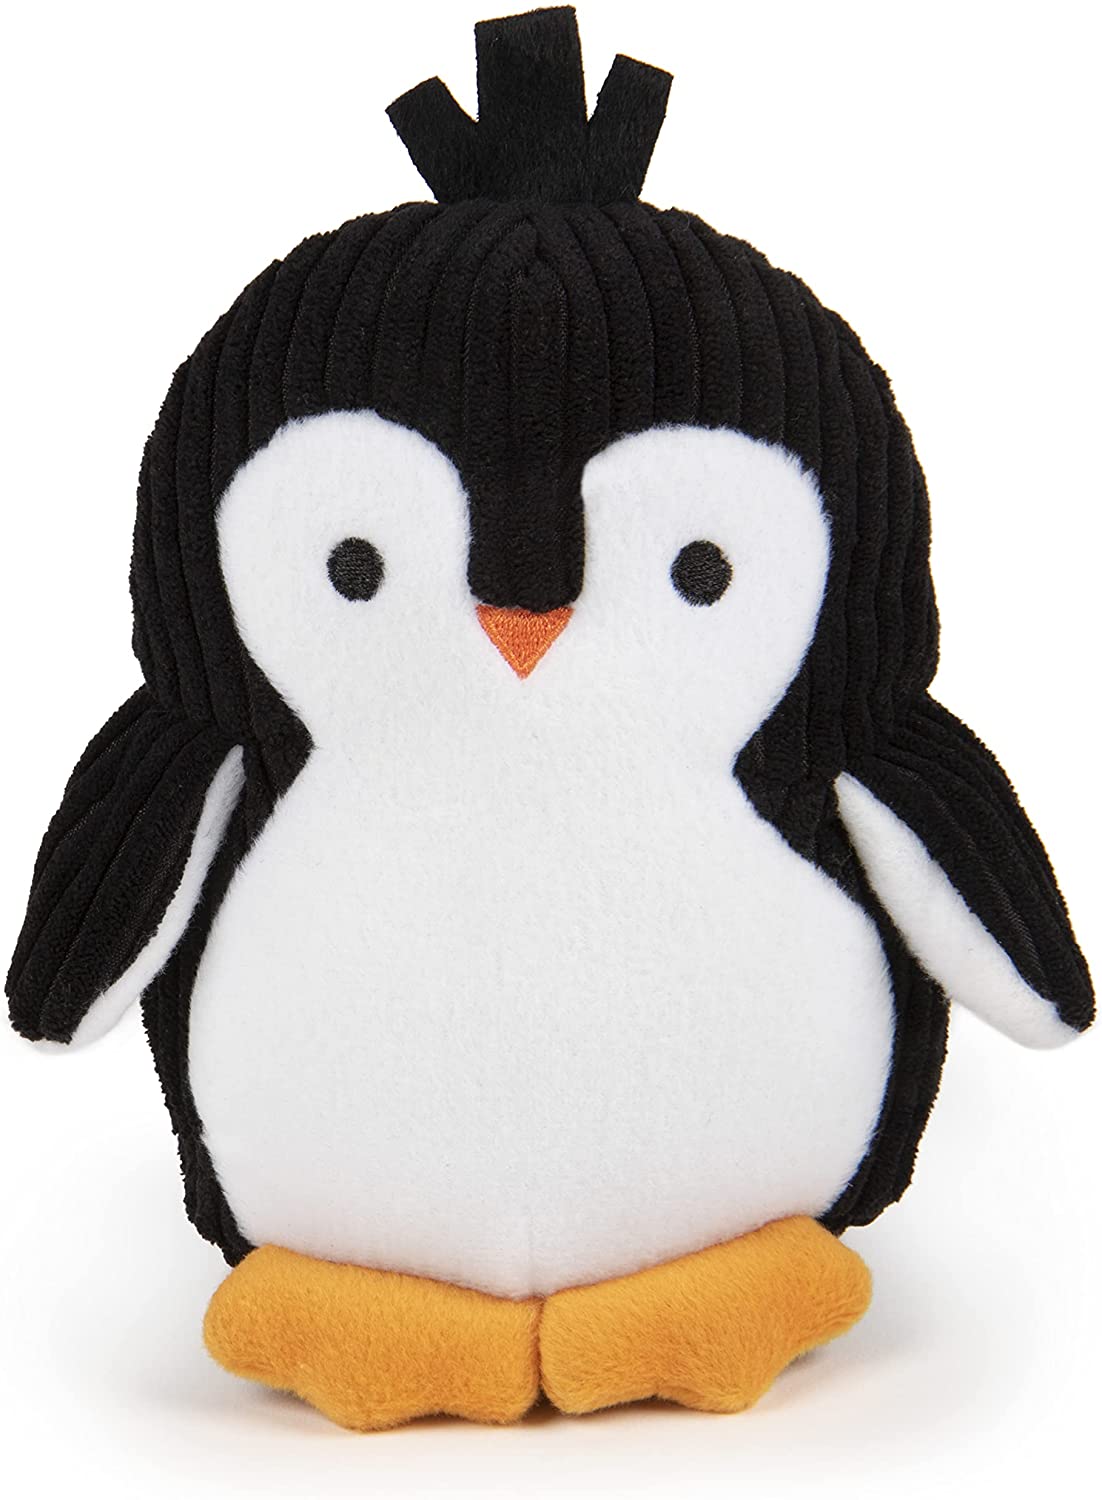 penguin plush toy